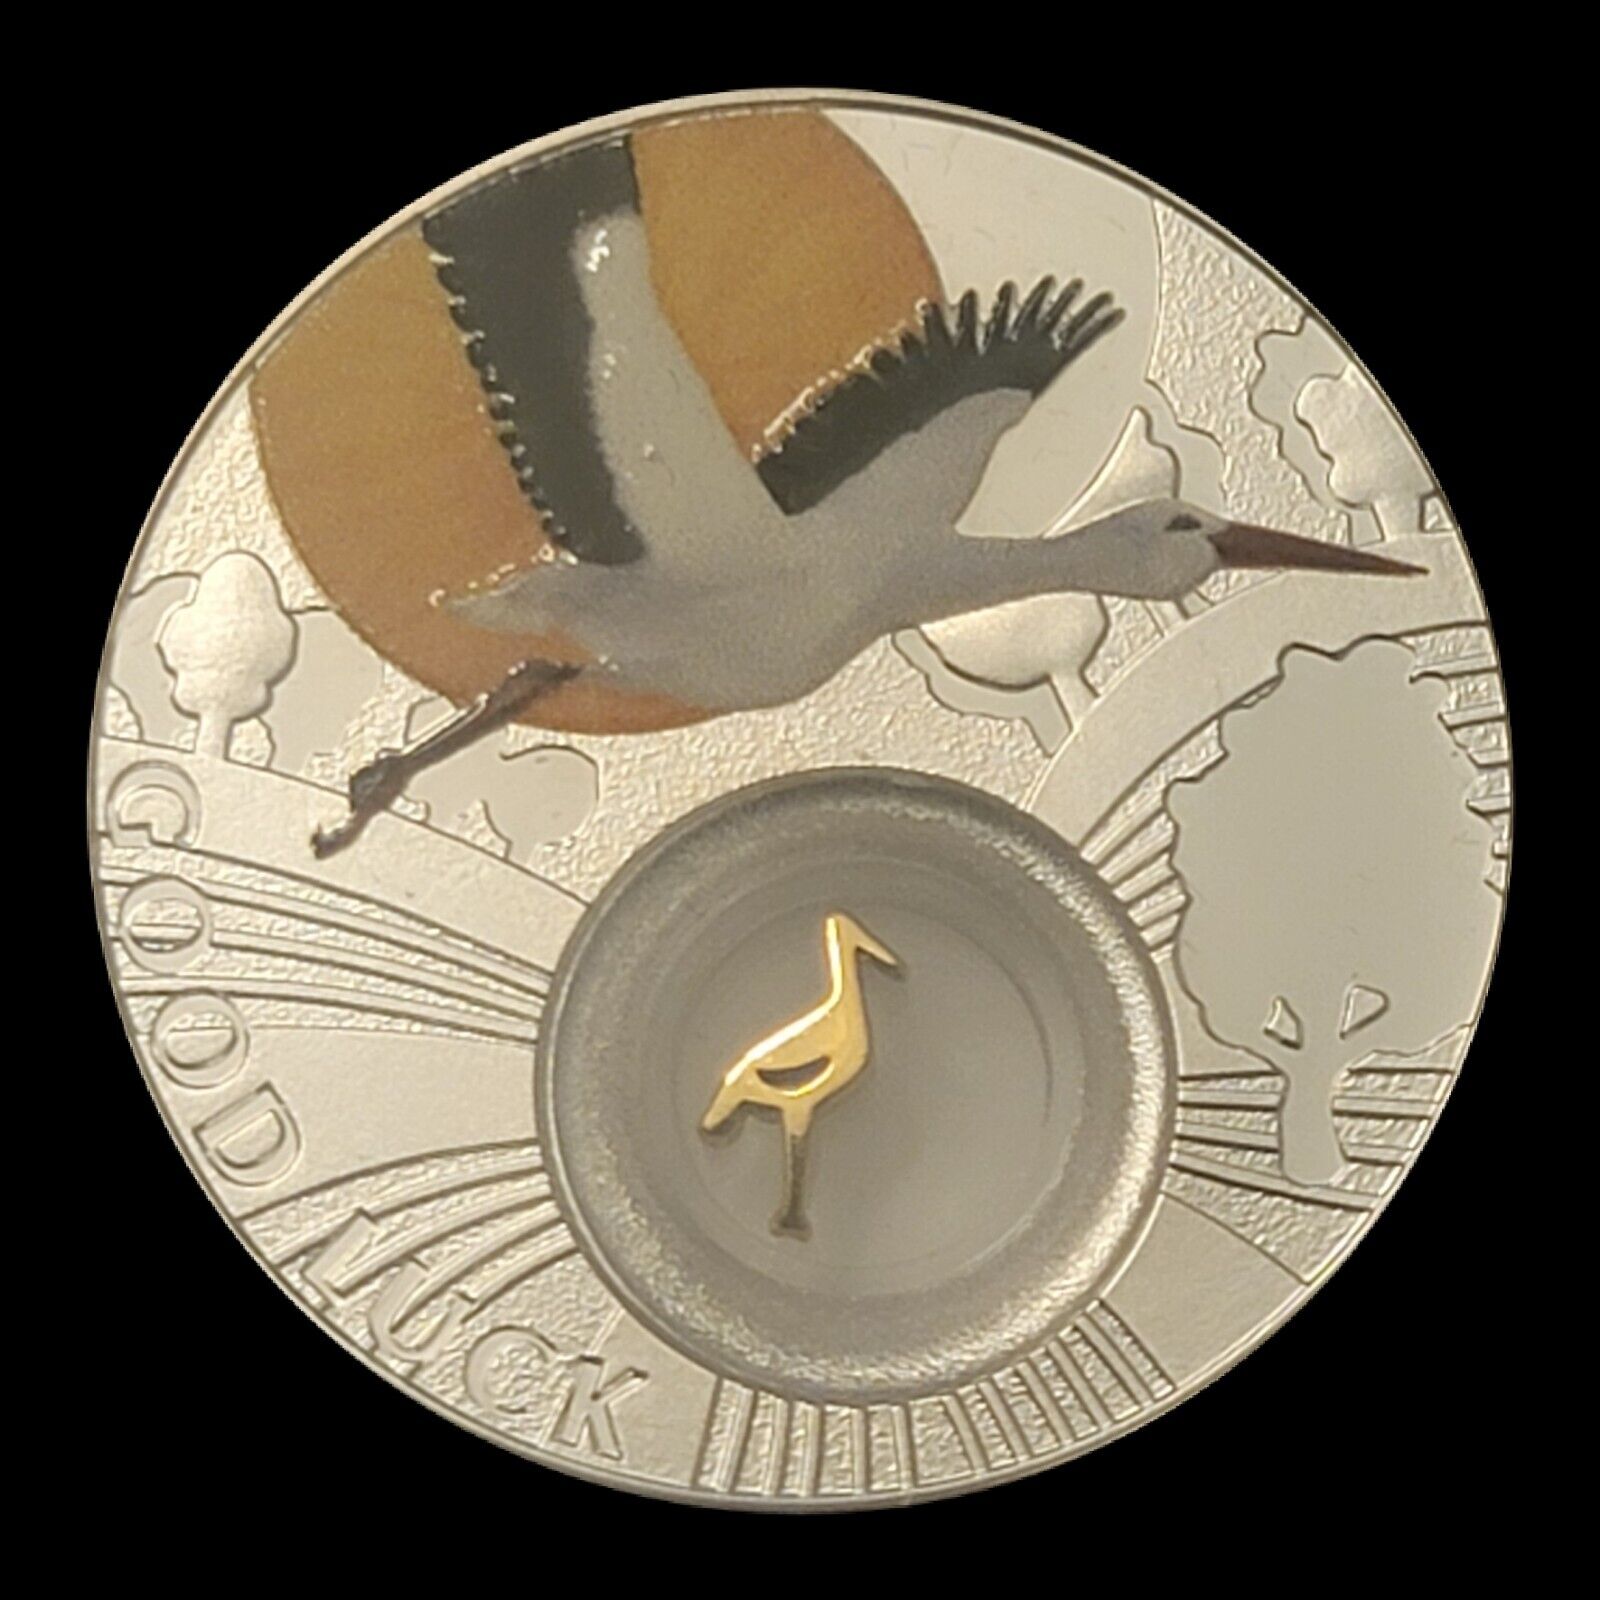 2014 Niue Lucky Coins Stork 14.14 Grams Proof Silver with Selective Gold Gild